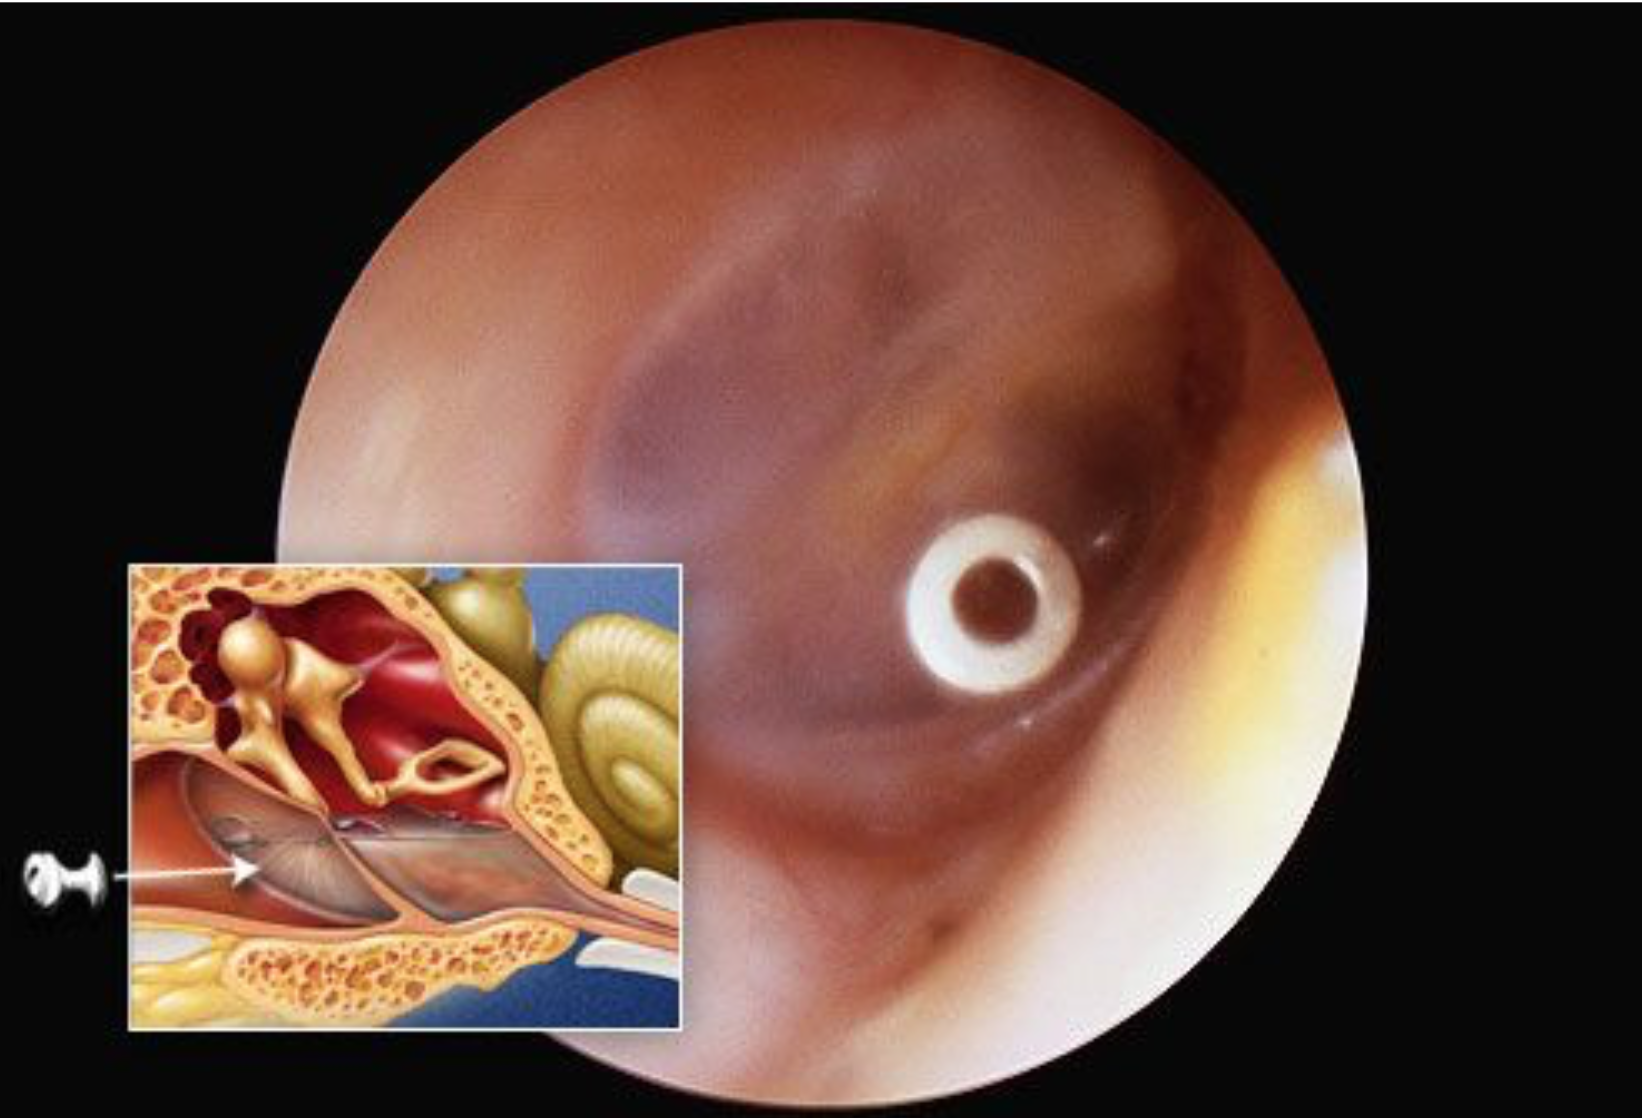 Fluid behind eardrum and dizziness